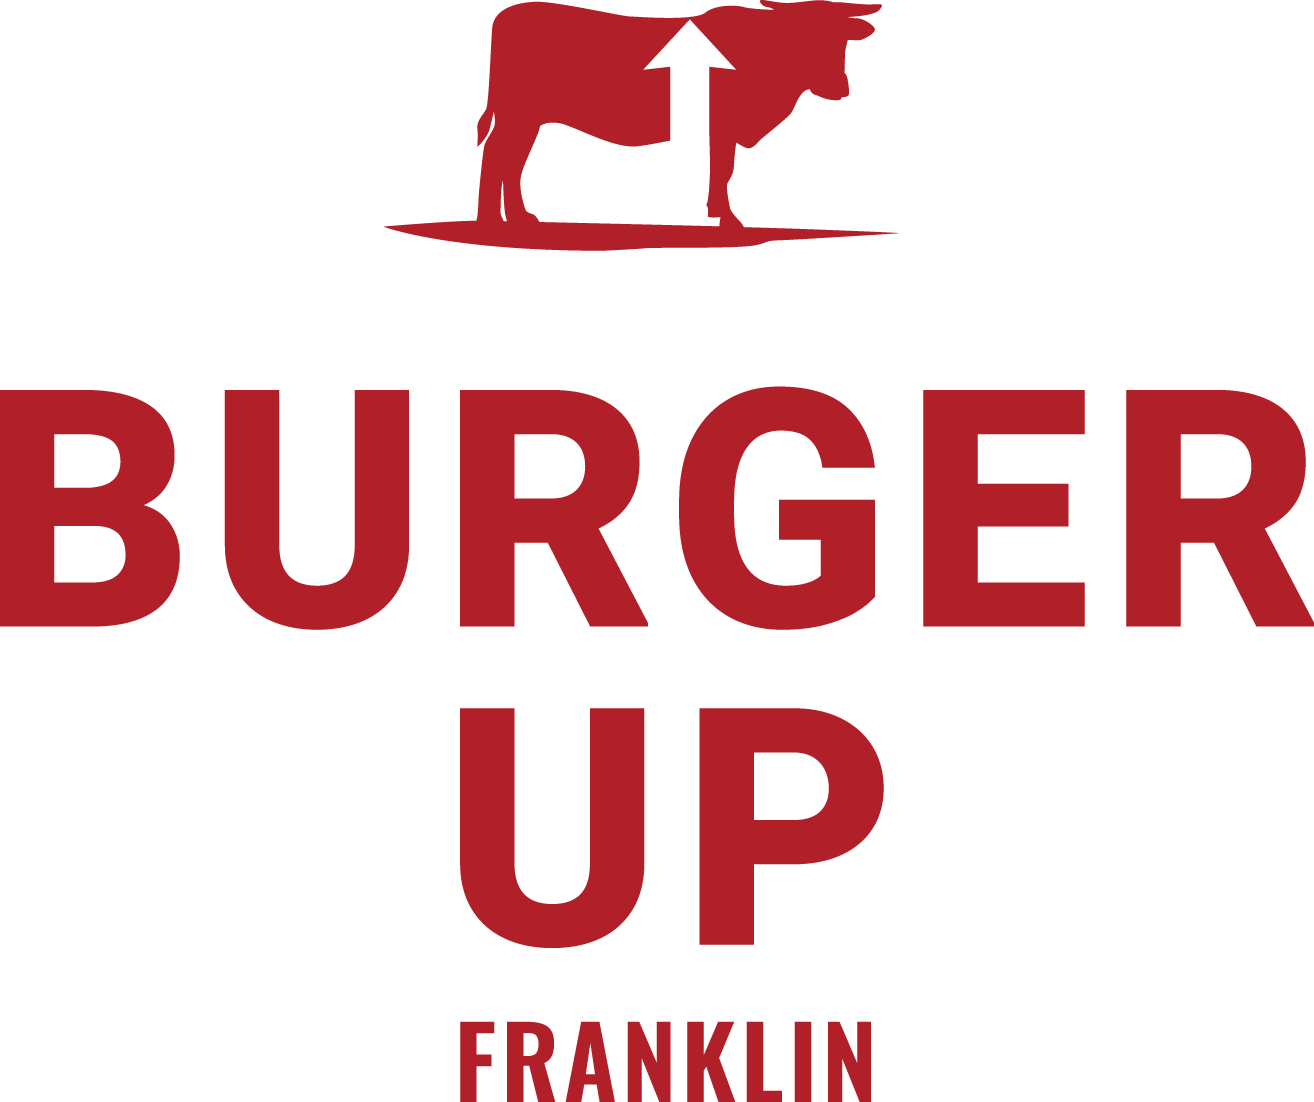 Burger Up Franklin logo scroll